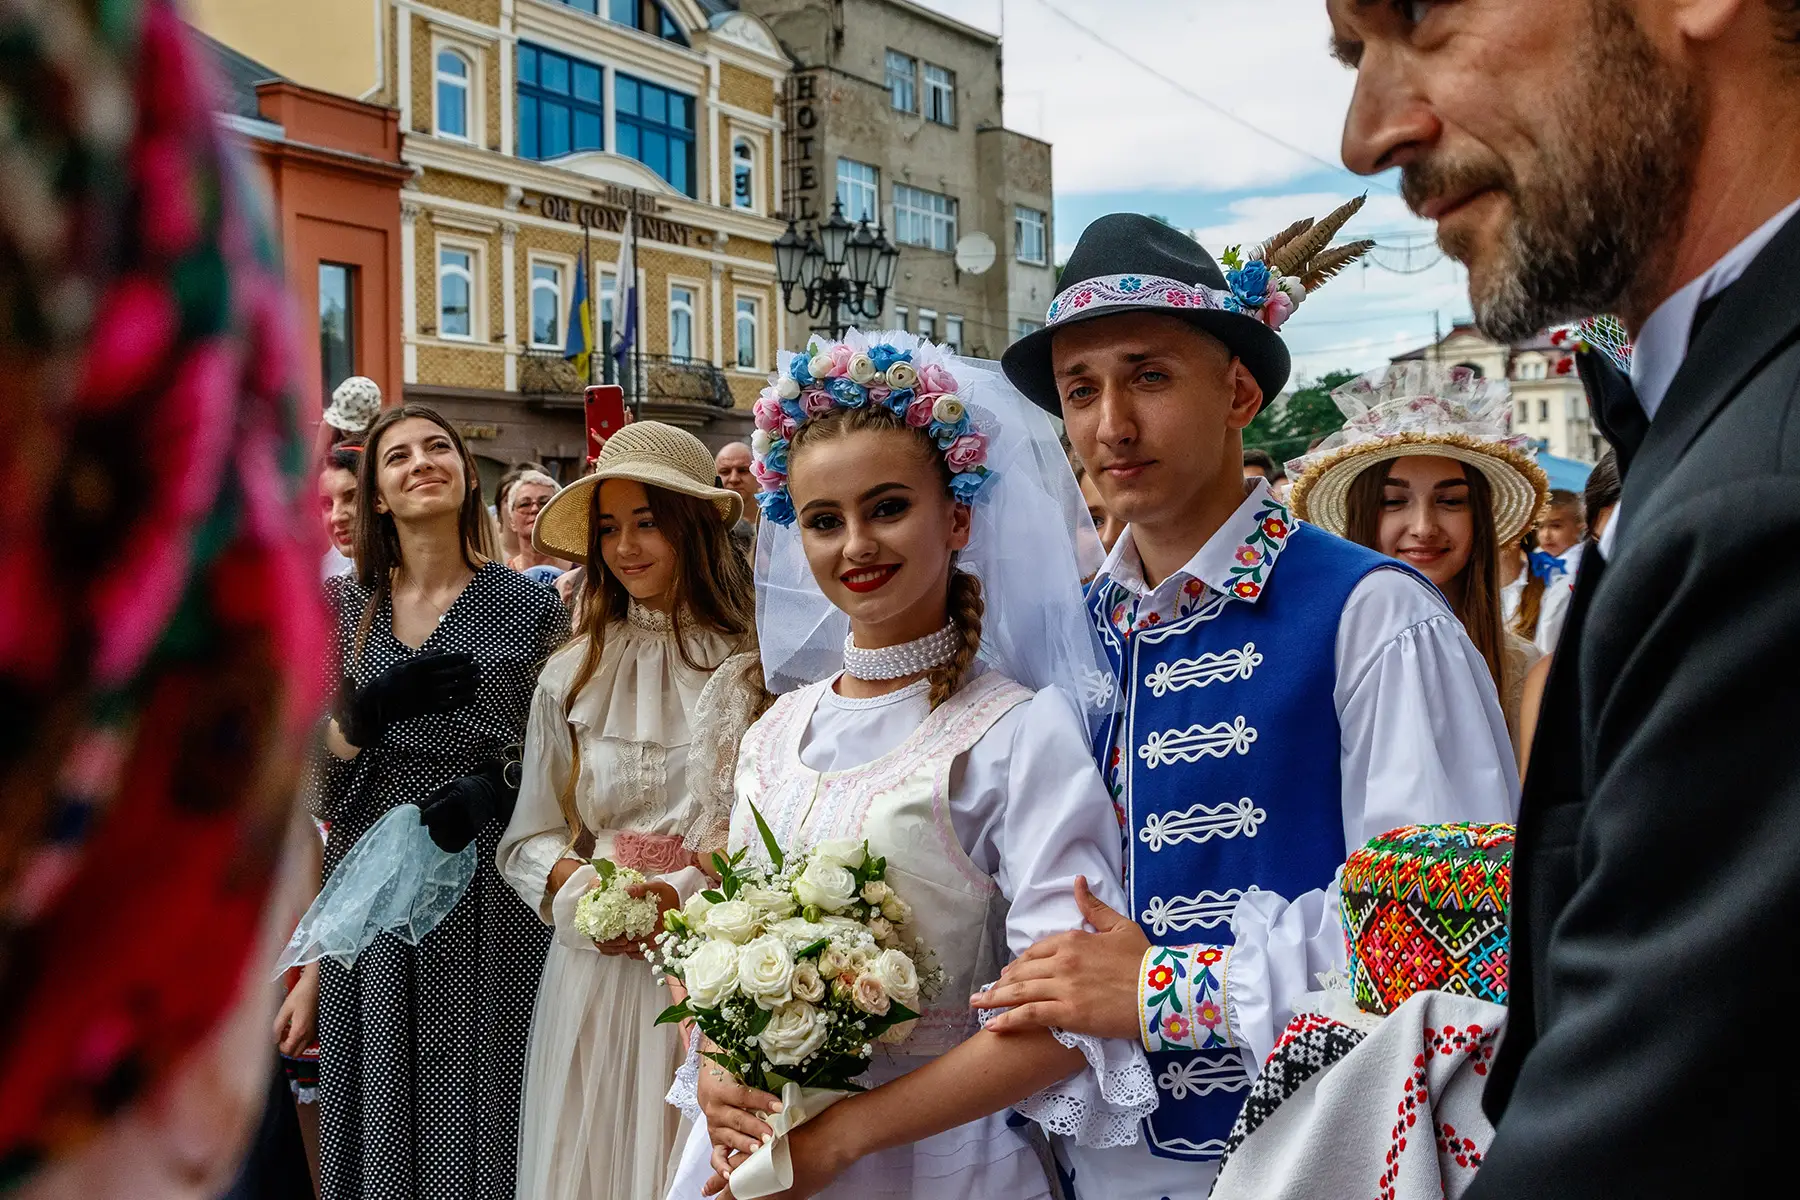 Traditional Ukrainian wedding clothing